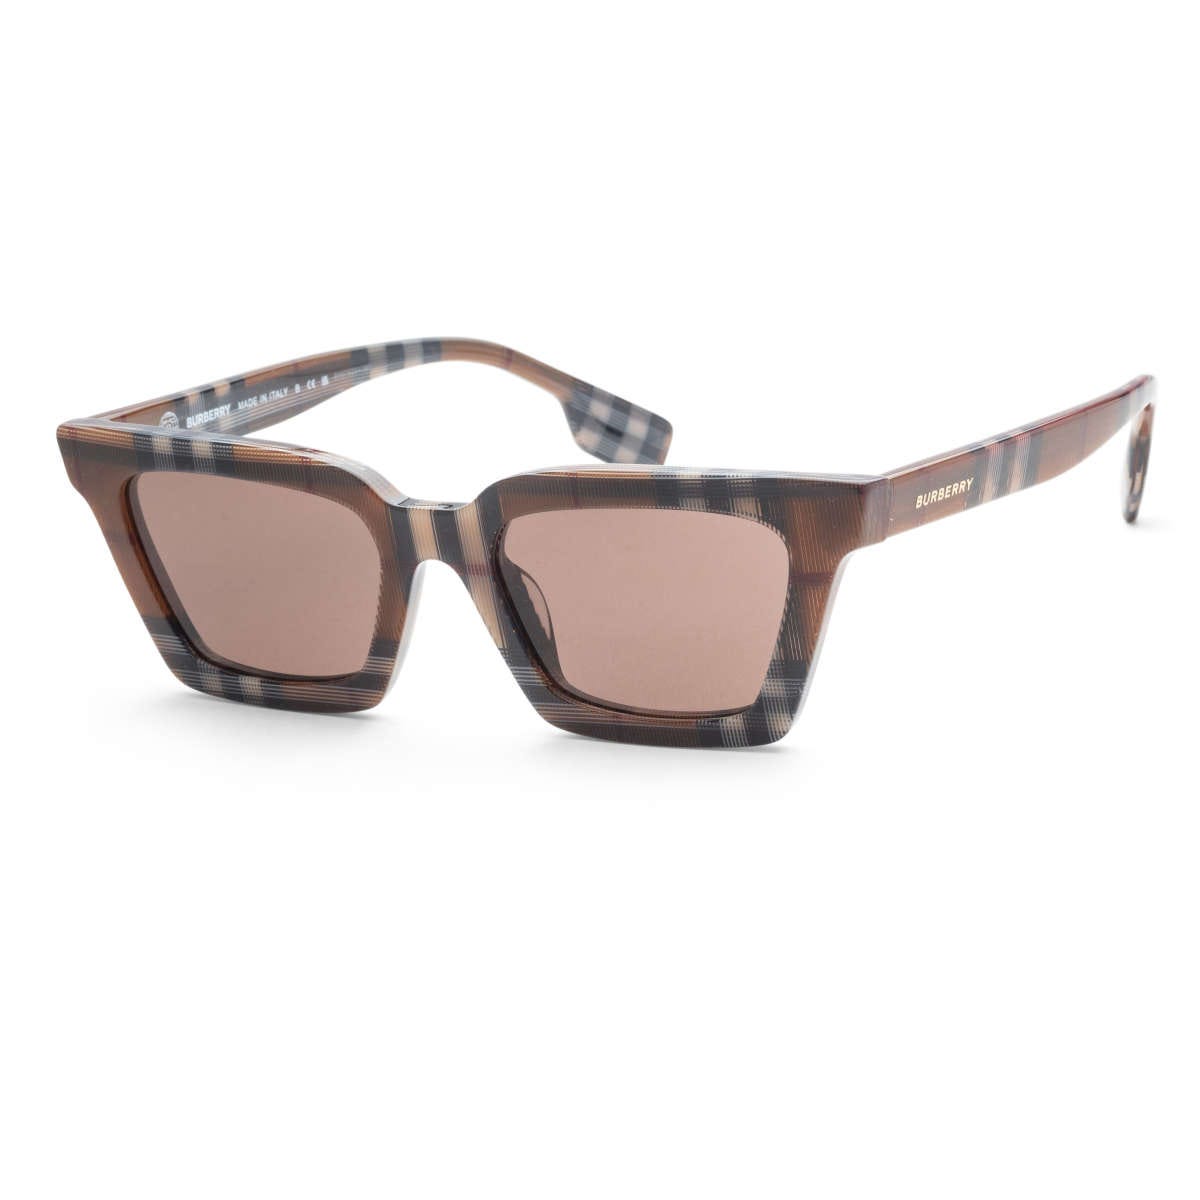 Tortoiseshell-patterned sunglasses with brown lenses.